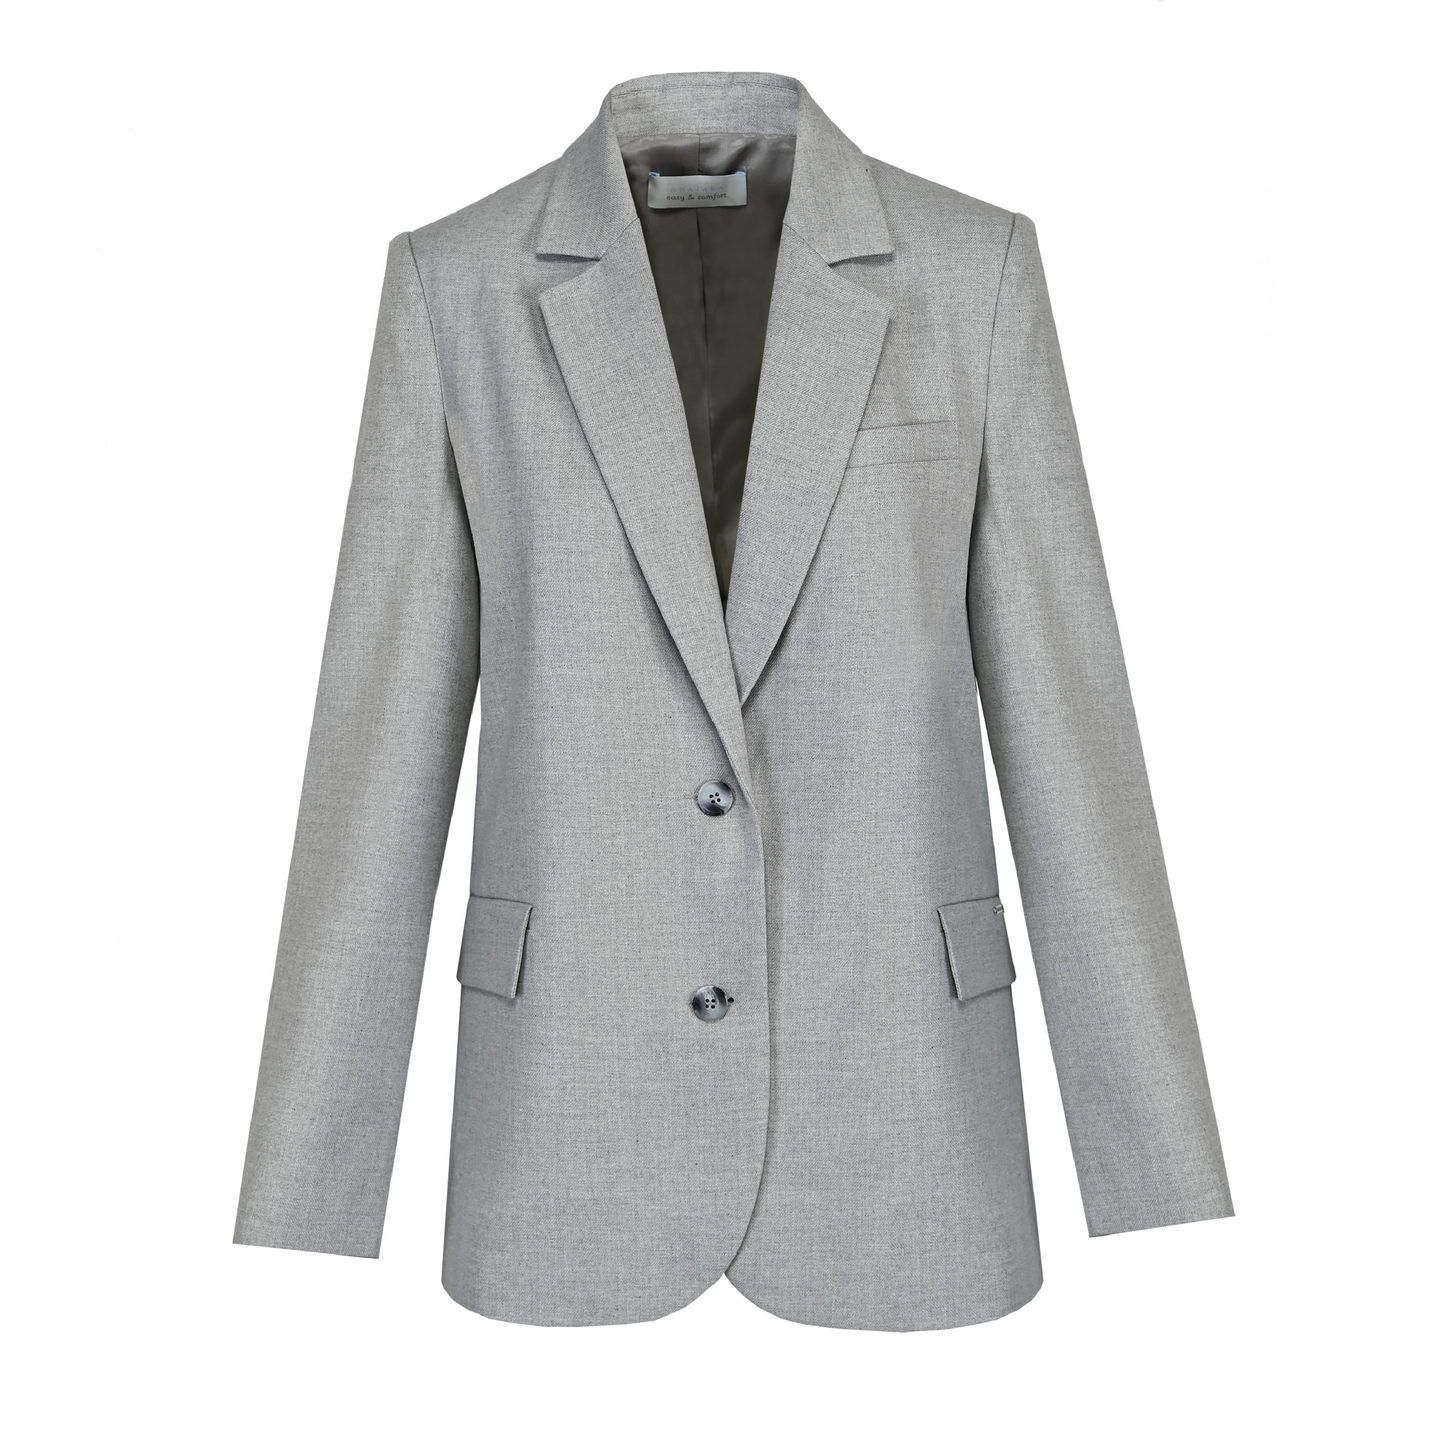 Platino Gray jacket